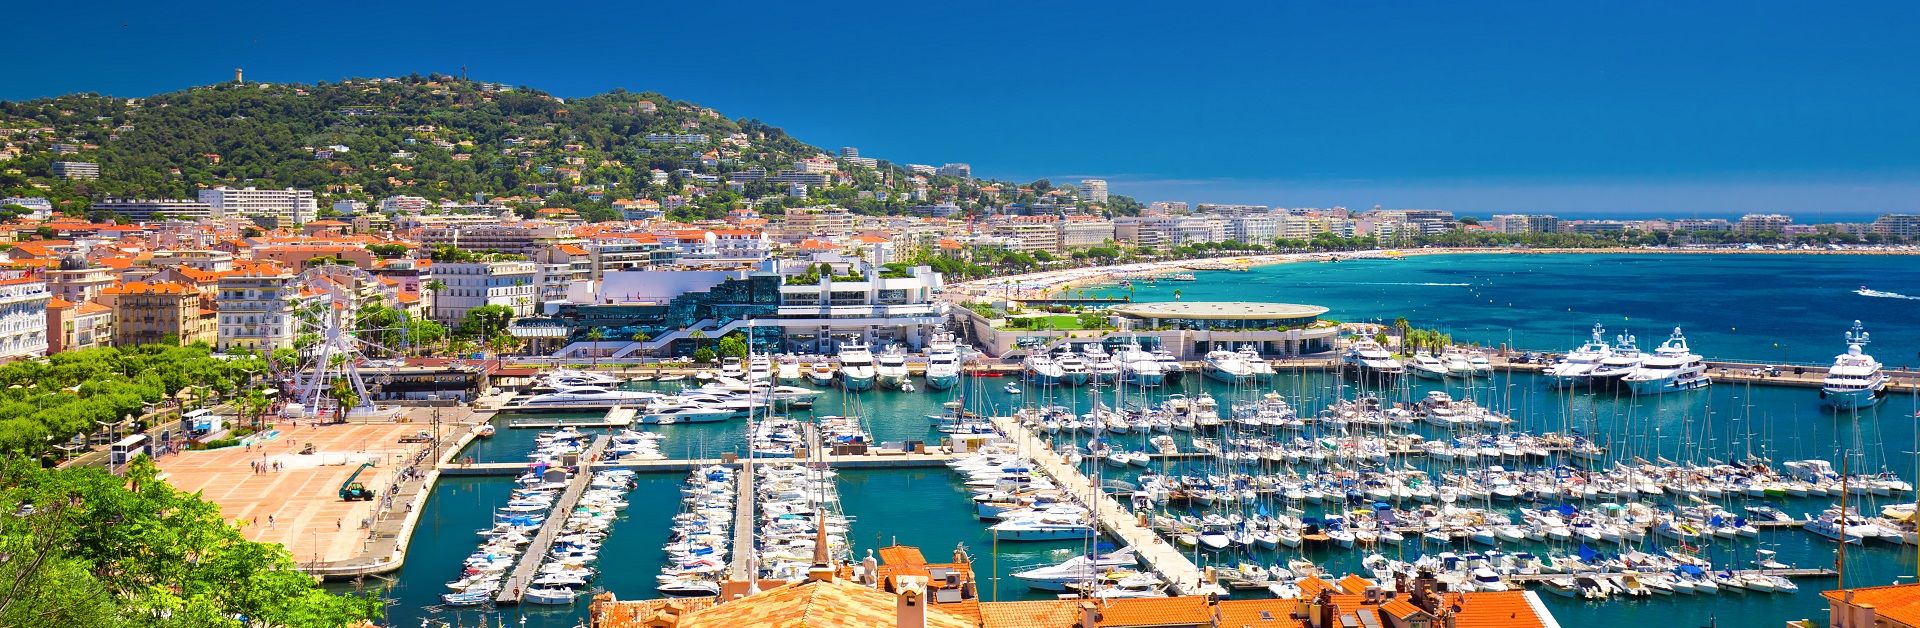 IPEM 2022 - Cannes